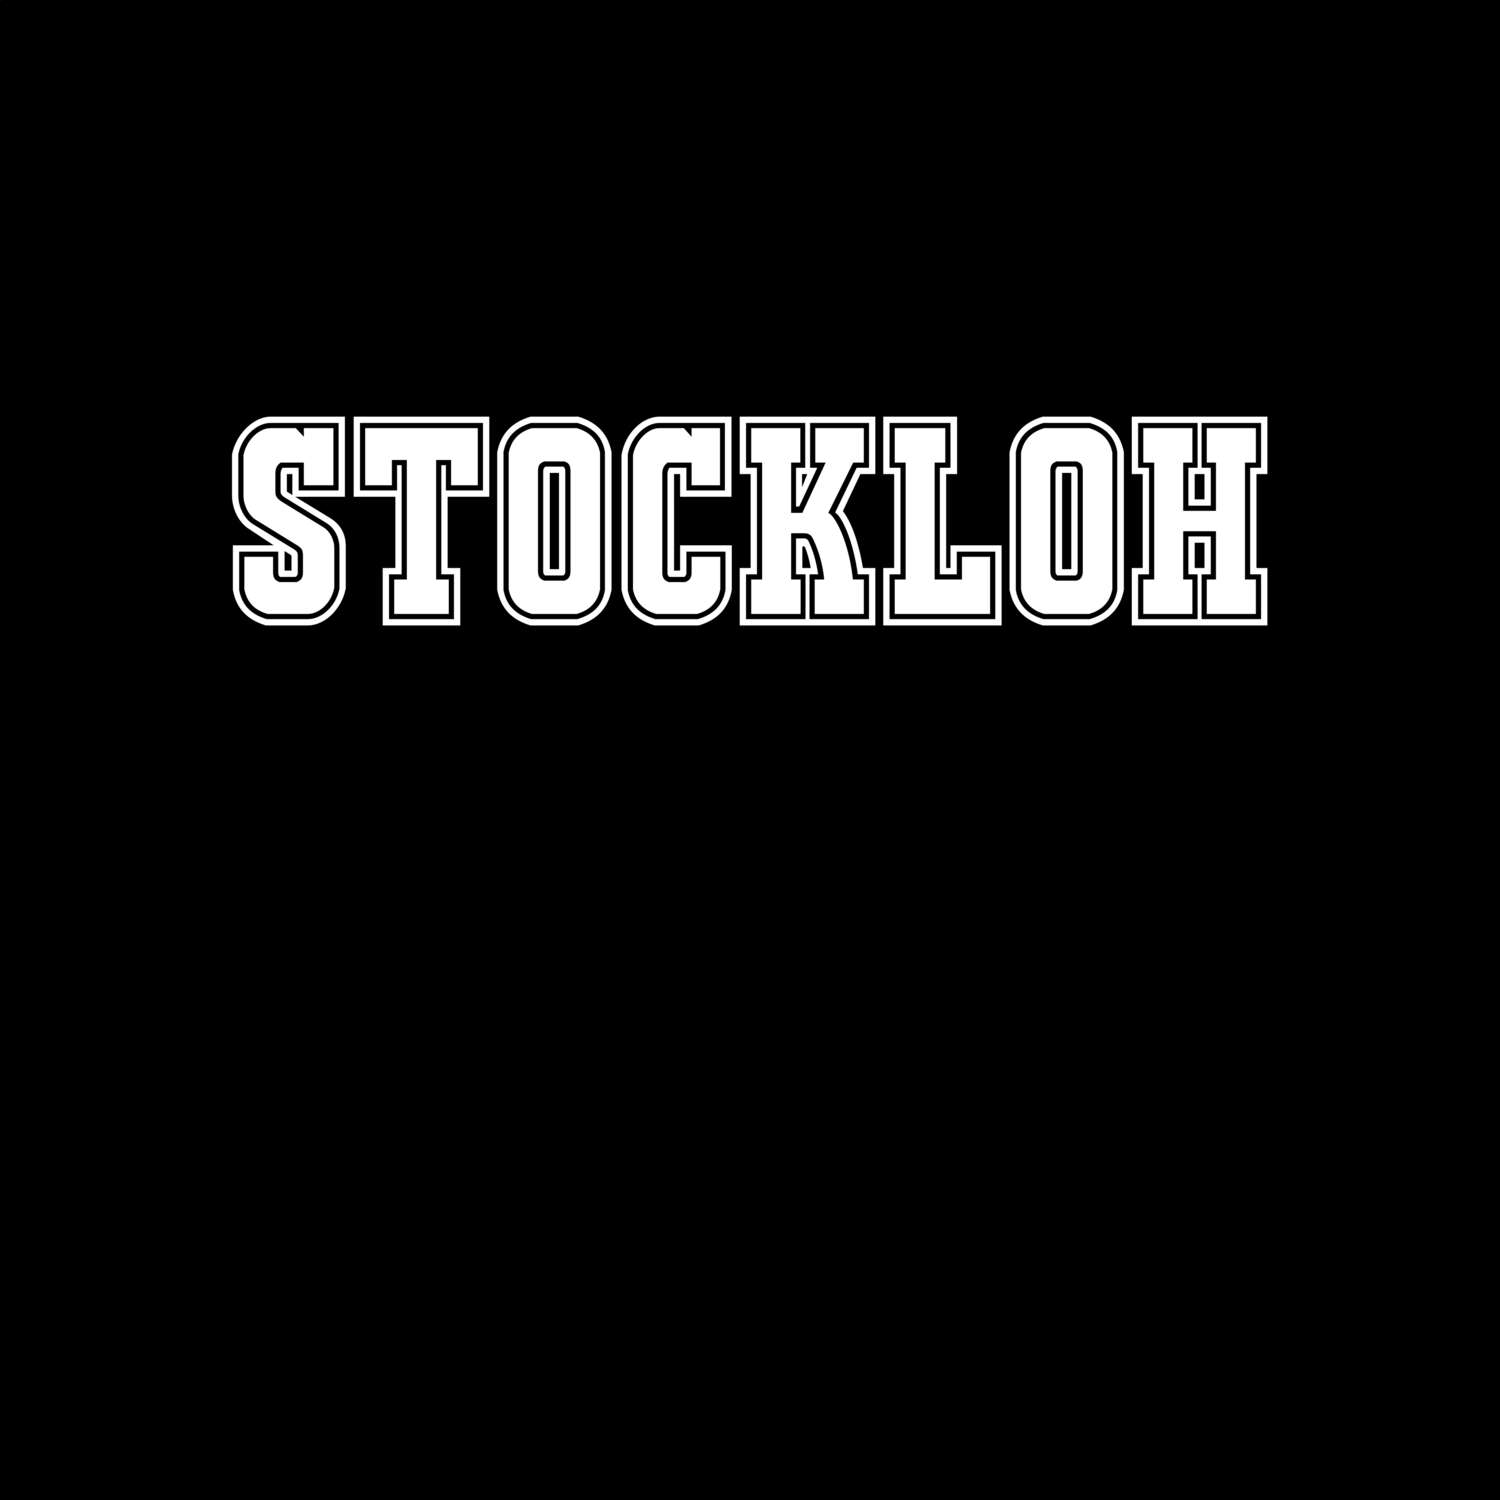 Stockloh T-Shirt »Classic«